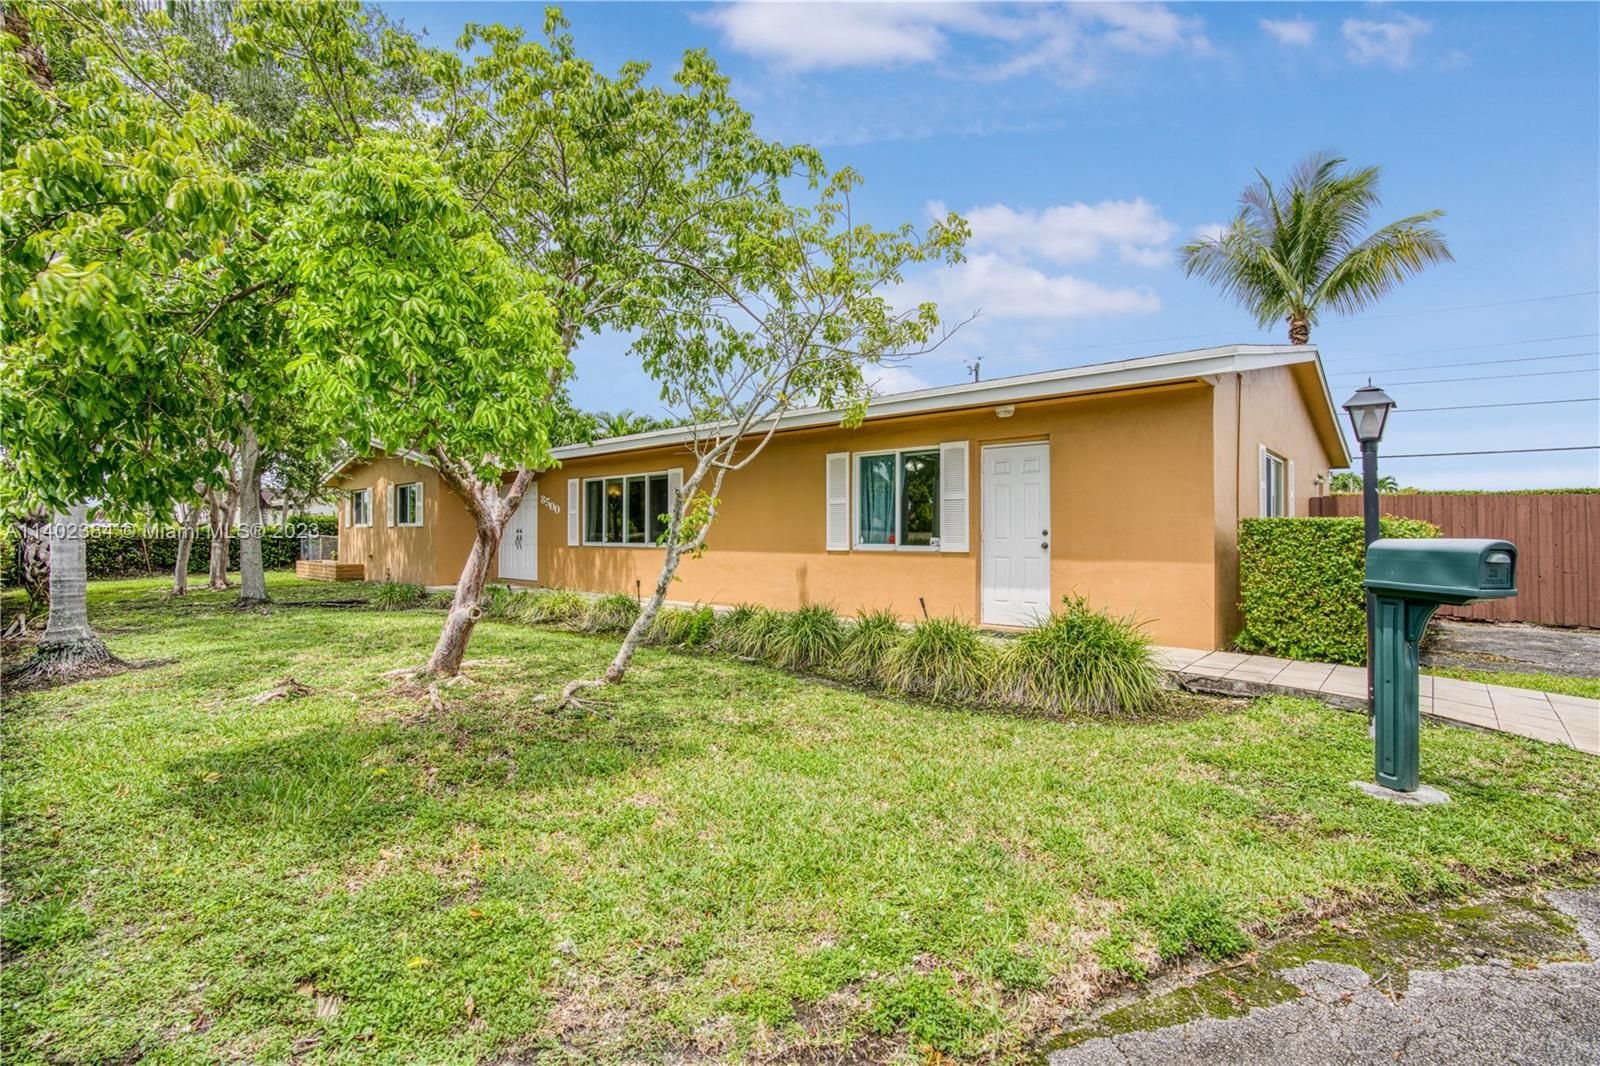 Real estate property located at 8500 87th Ave, Miami-Dade County, Miami, FL